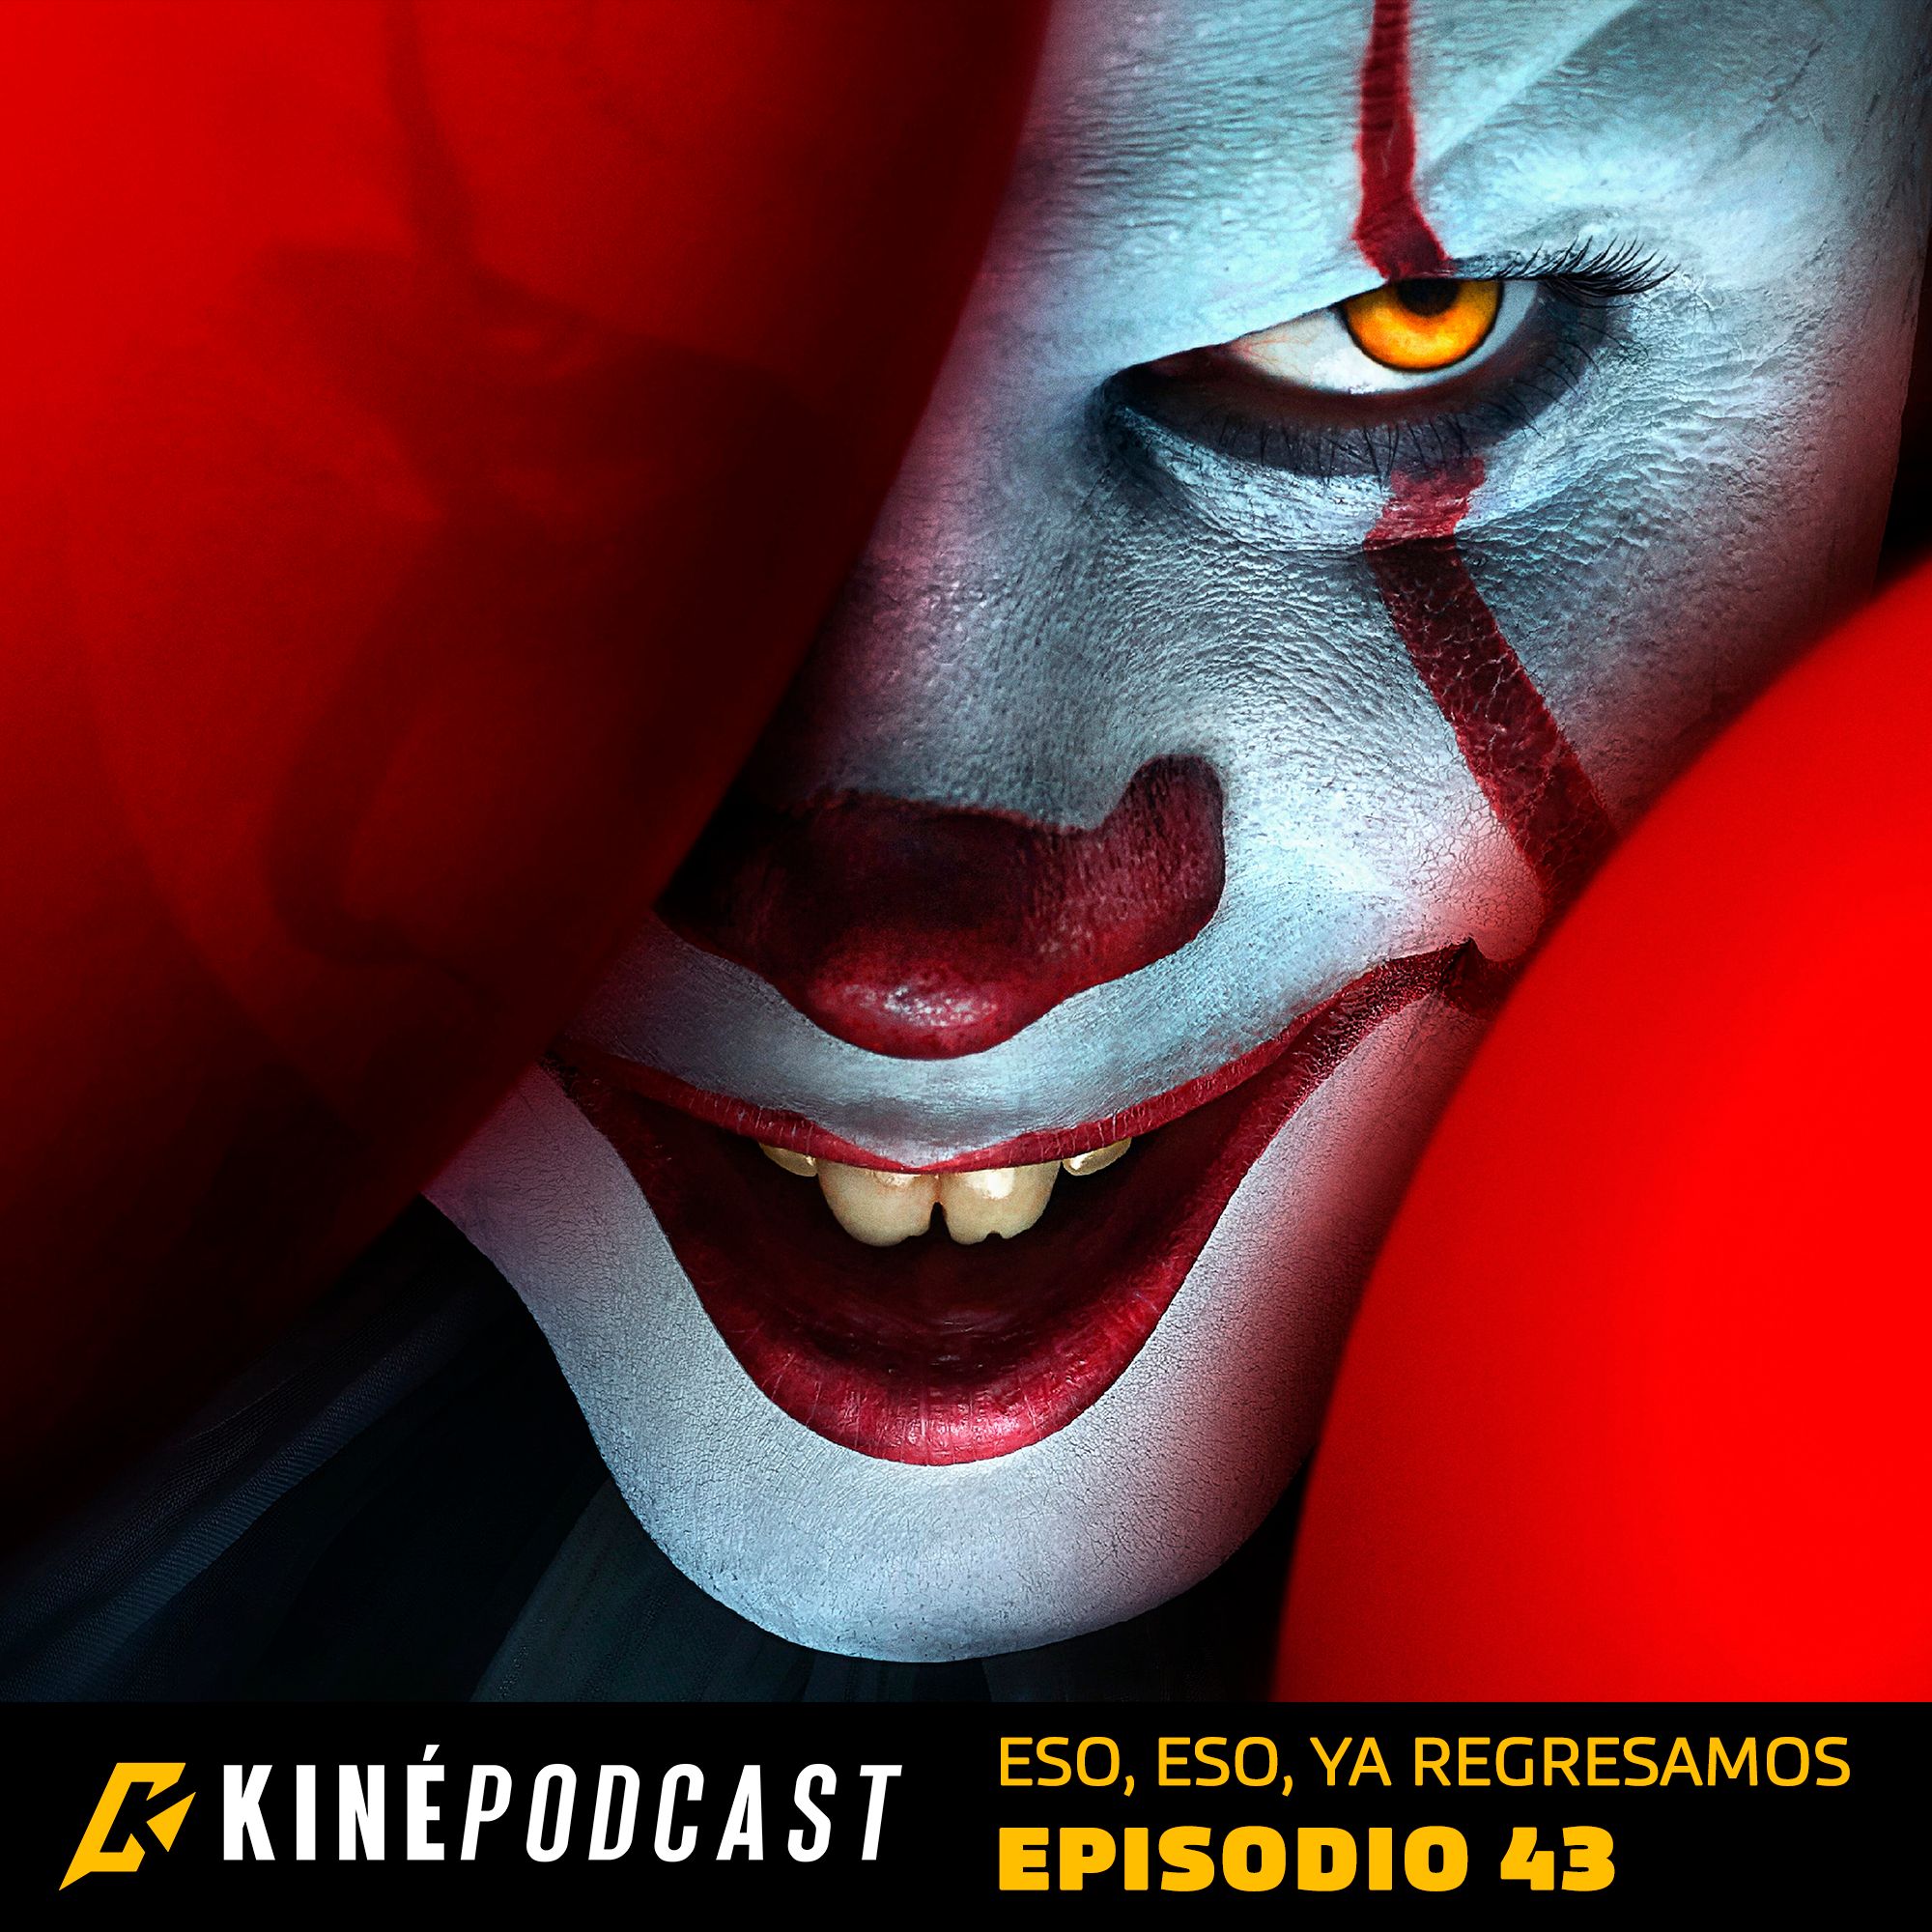 Kinepodcast 43 - Eso, Eso, Ya Regresamos